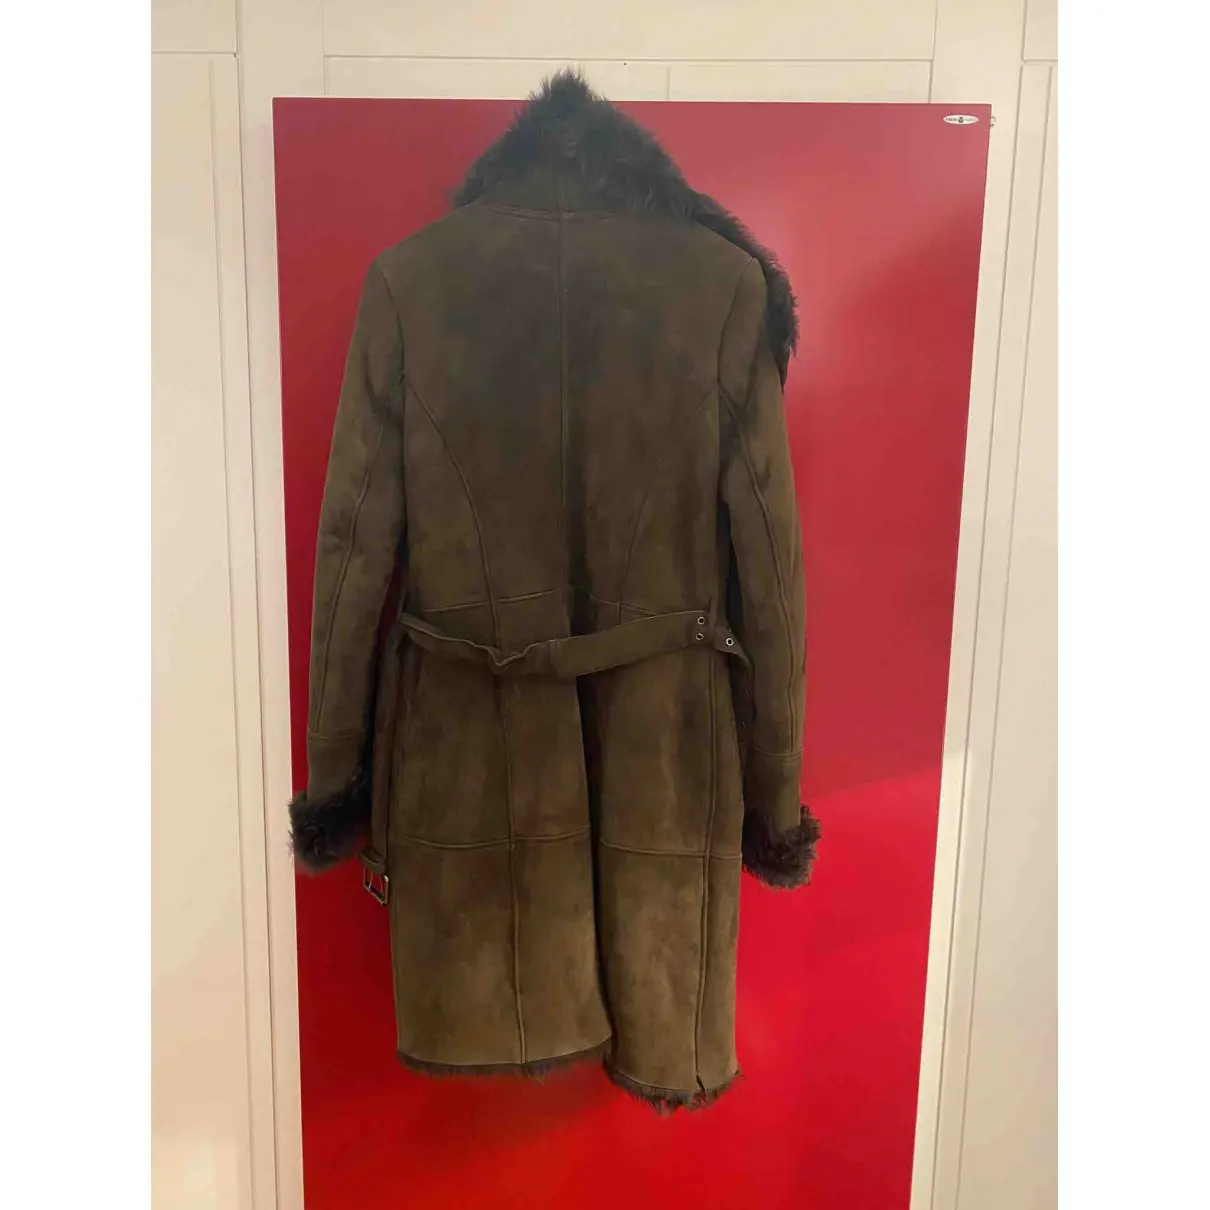 Buy Patrizia Pepe Leather coat online